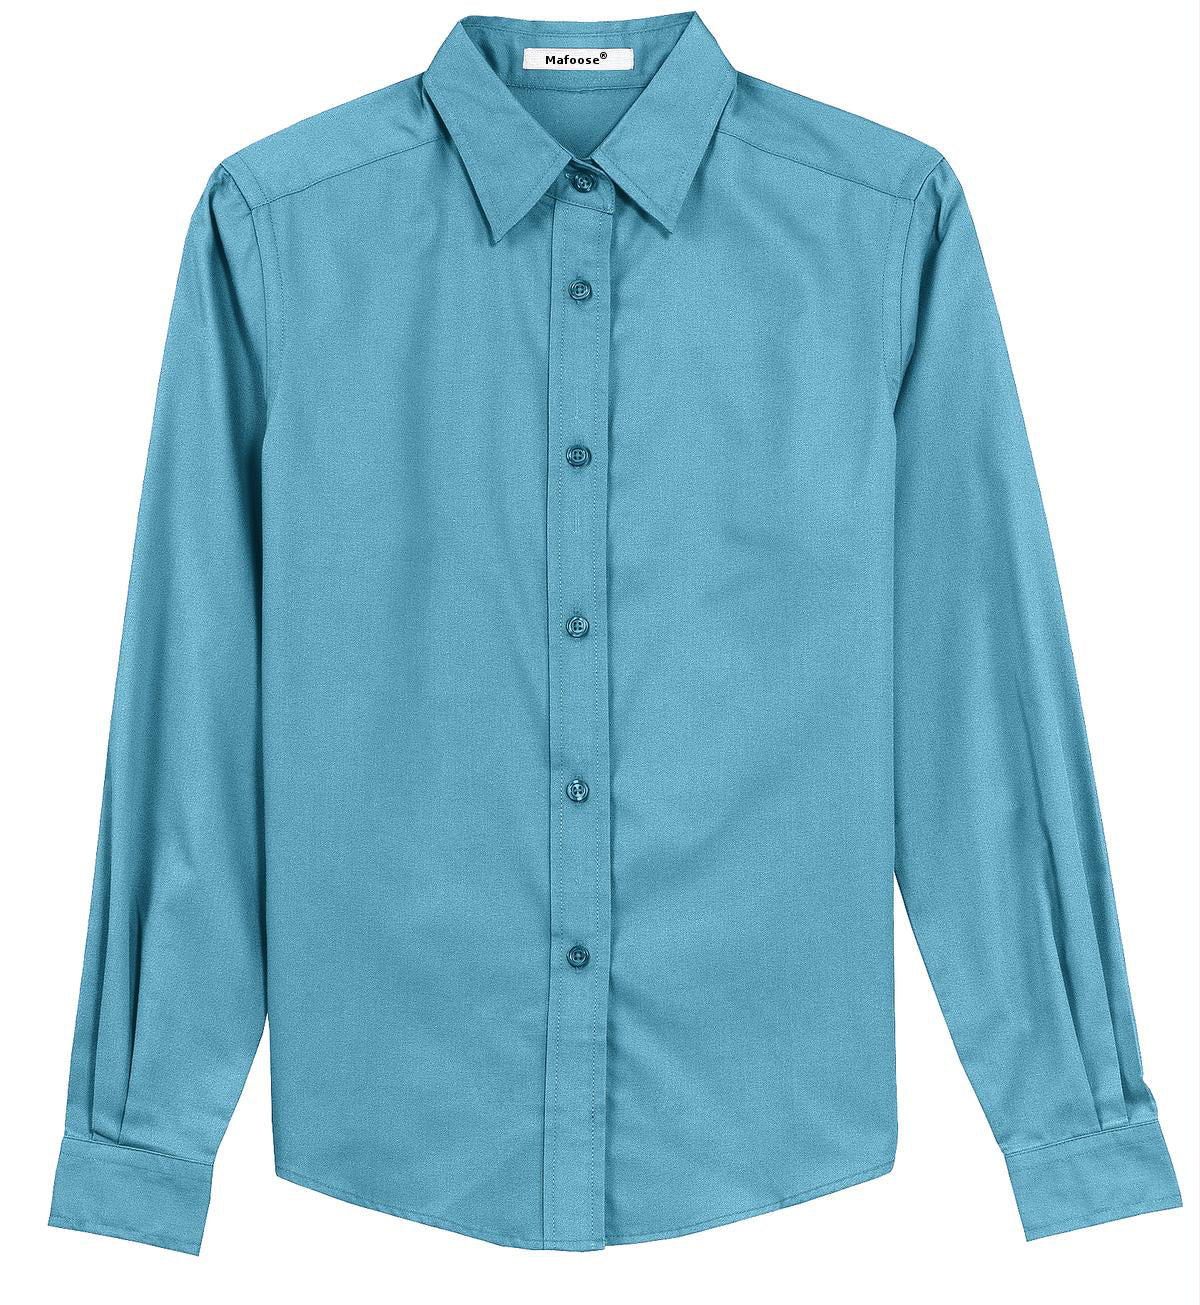 Mafoose Women's Long Sleeve Easy Care Shirt Maui Blue-Front